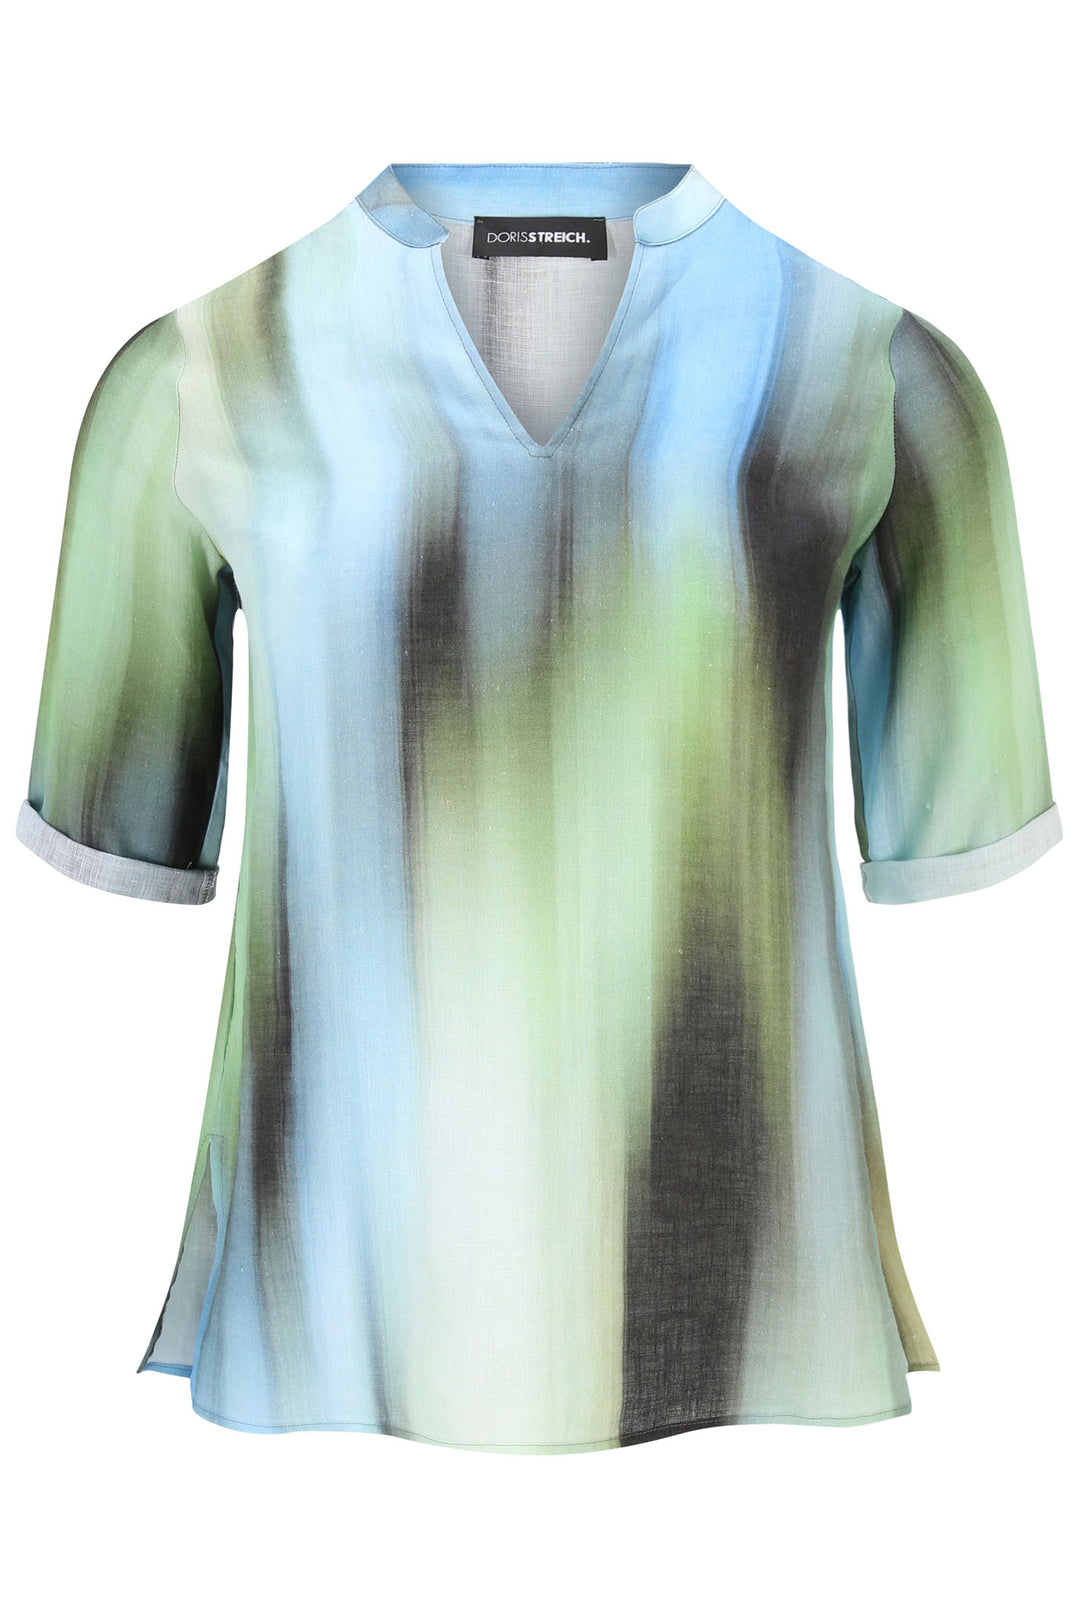 Doris Streich 257732 59 Blue Green Print Split Neck Short Sleeve Top - Shirley Allum Boutique